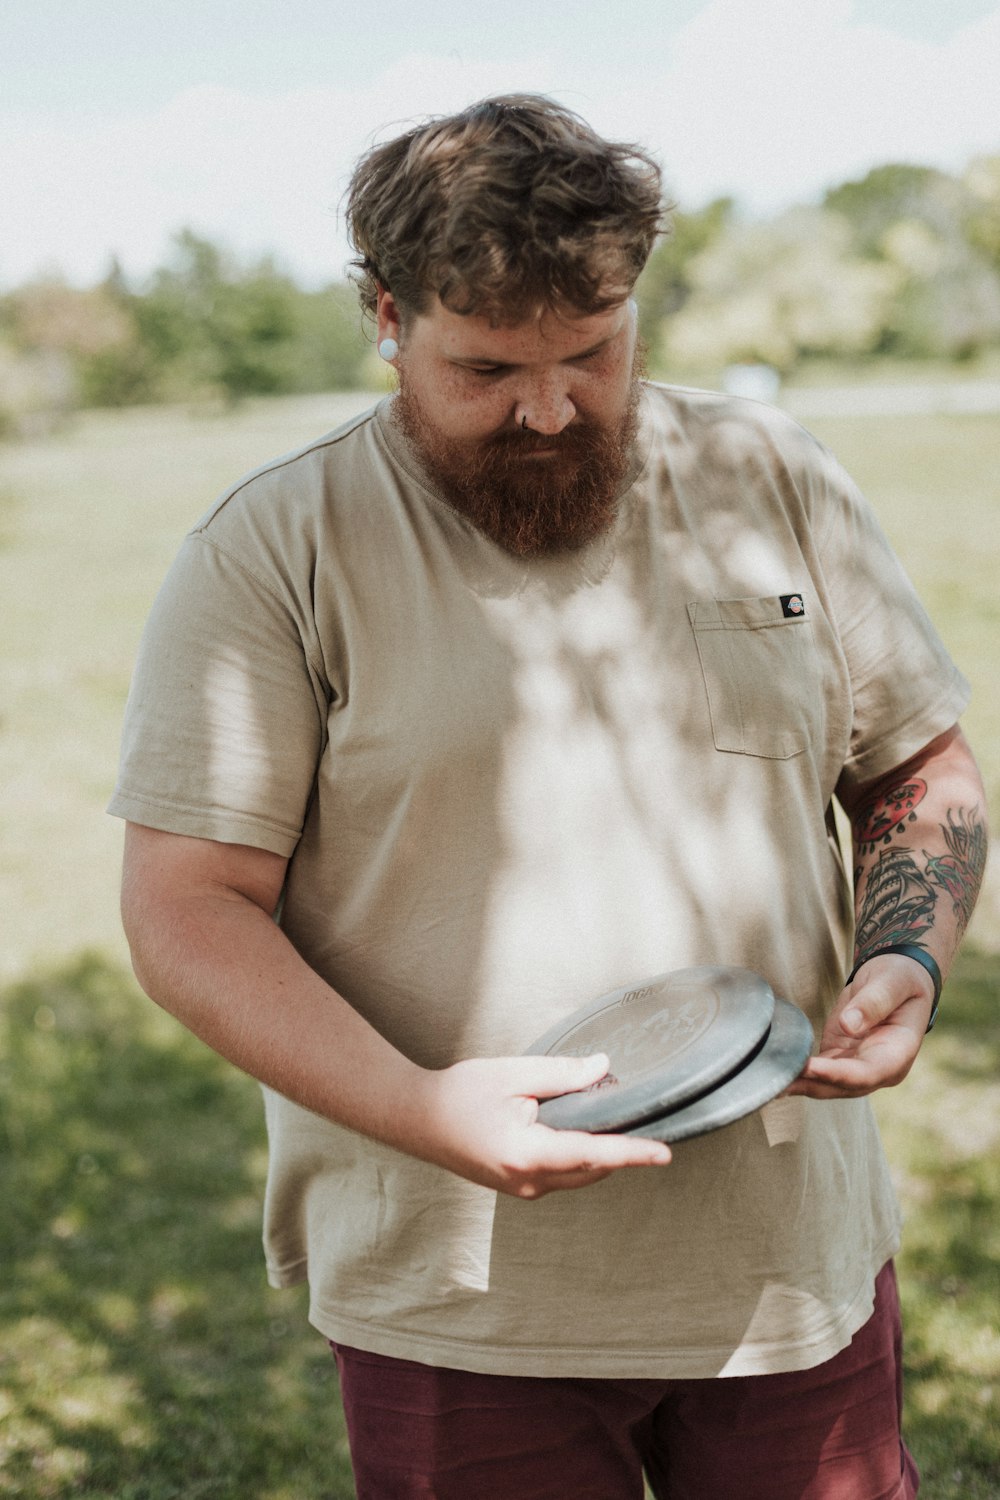 a man holding a frisbee